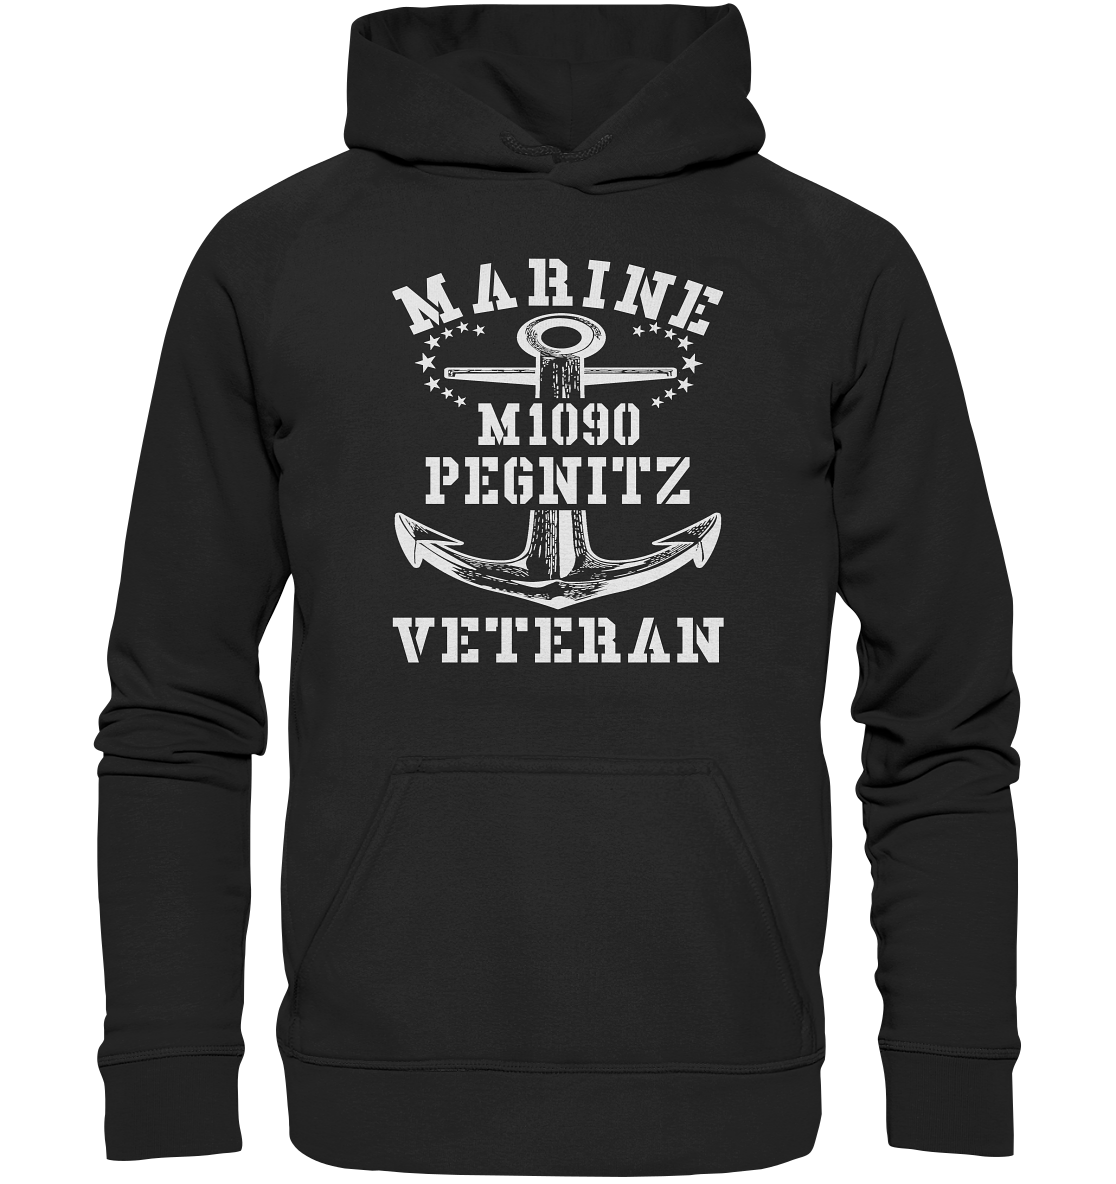 M1090 PEGNITZ Marine Veteran - Basic Unisex Hoodie